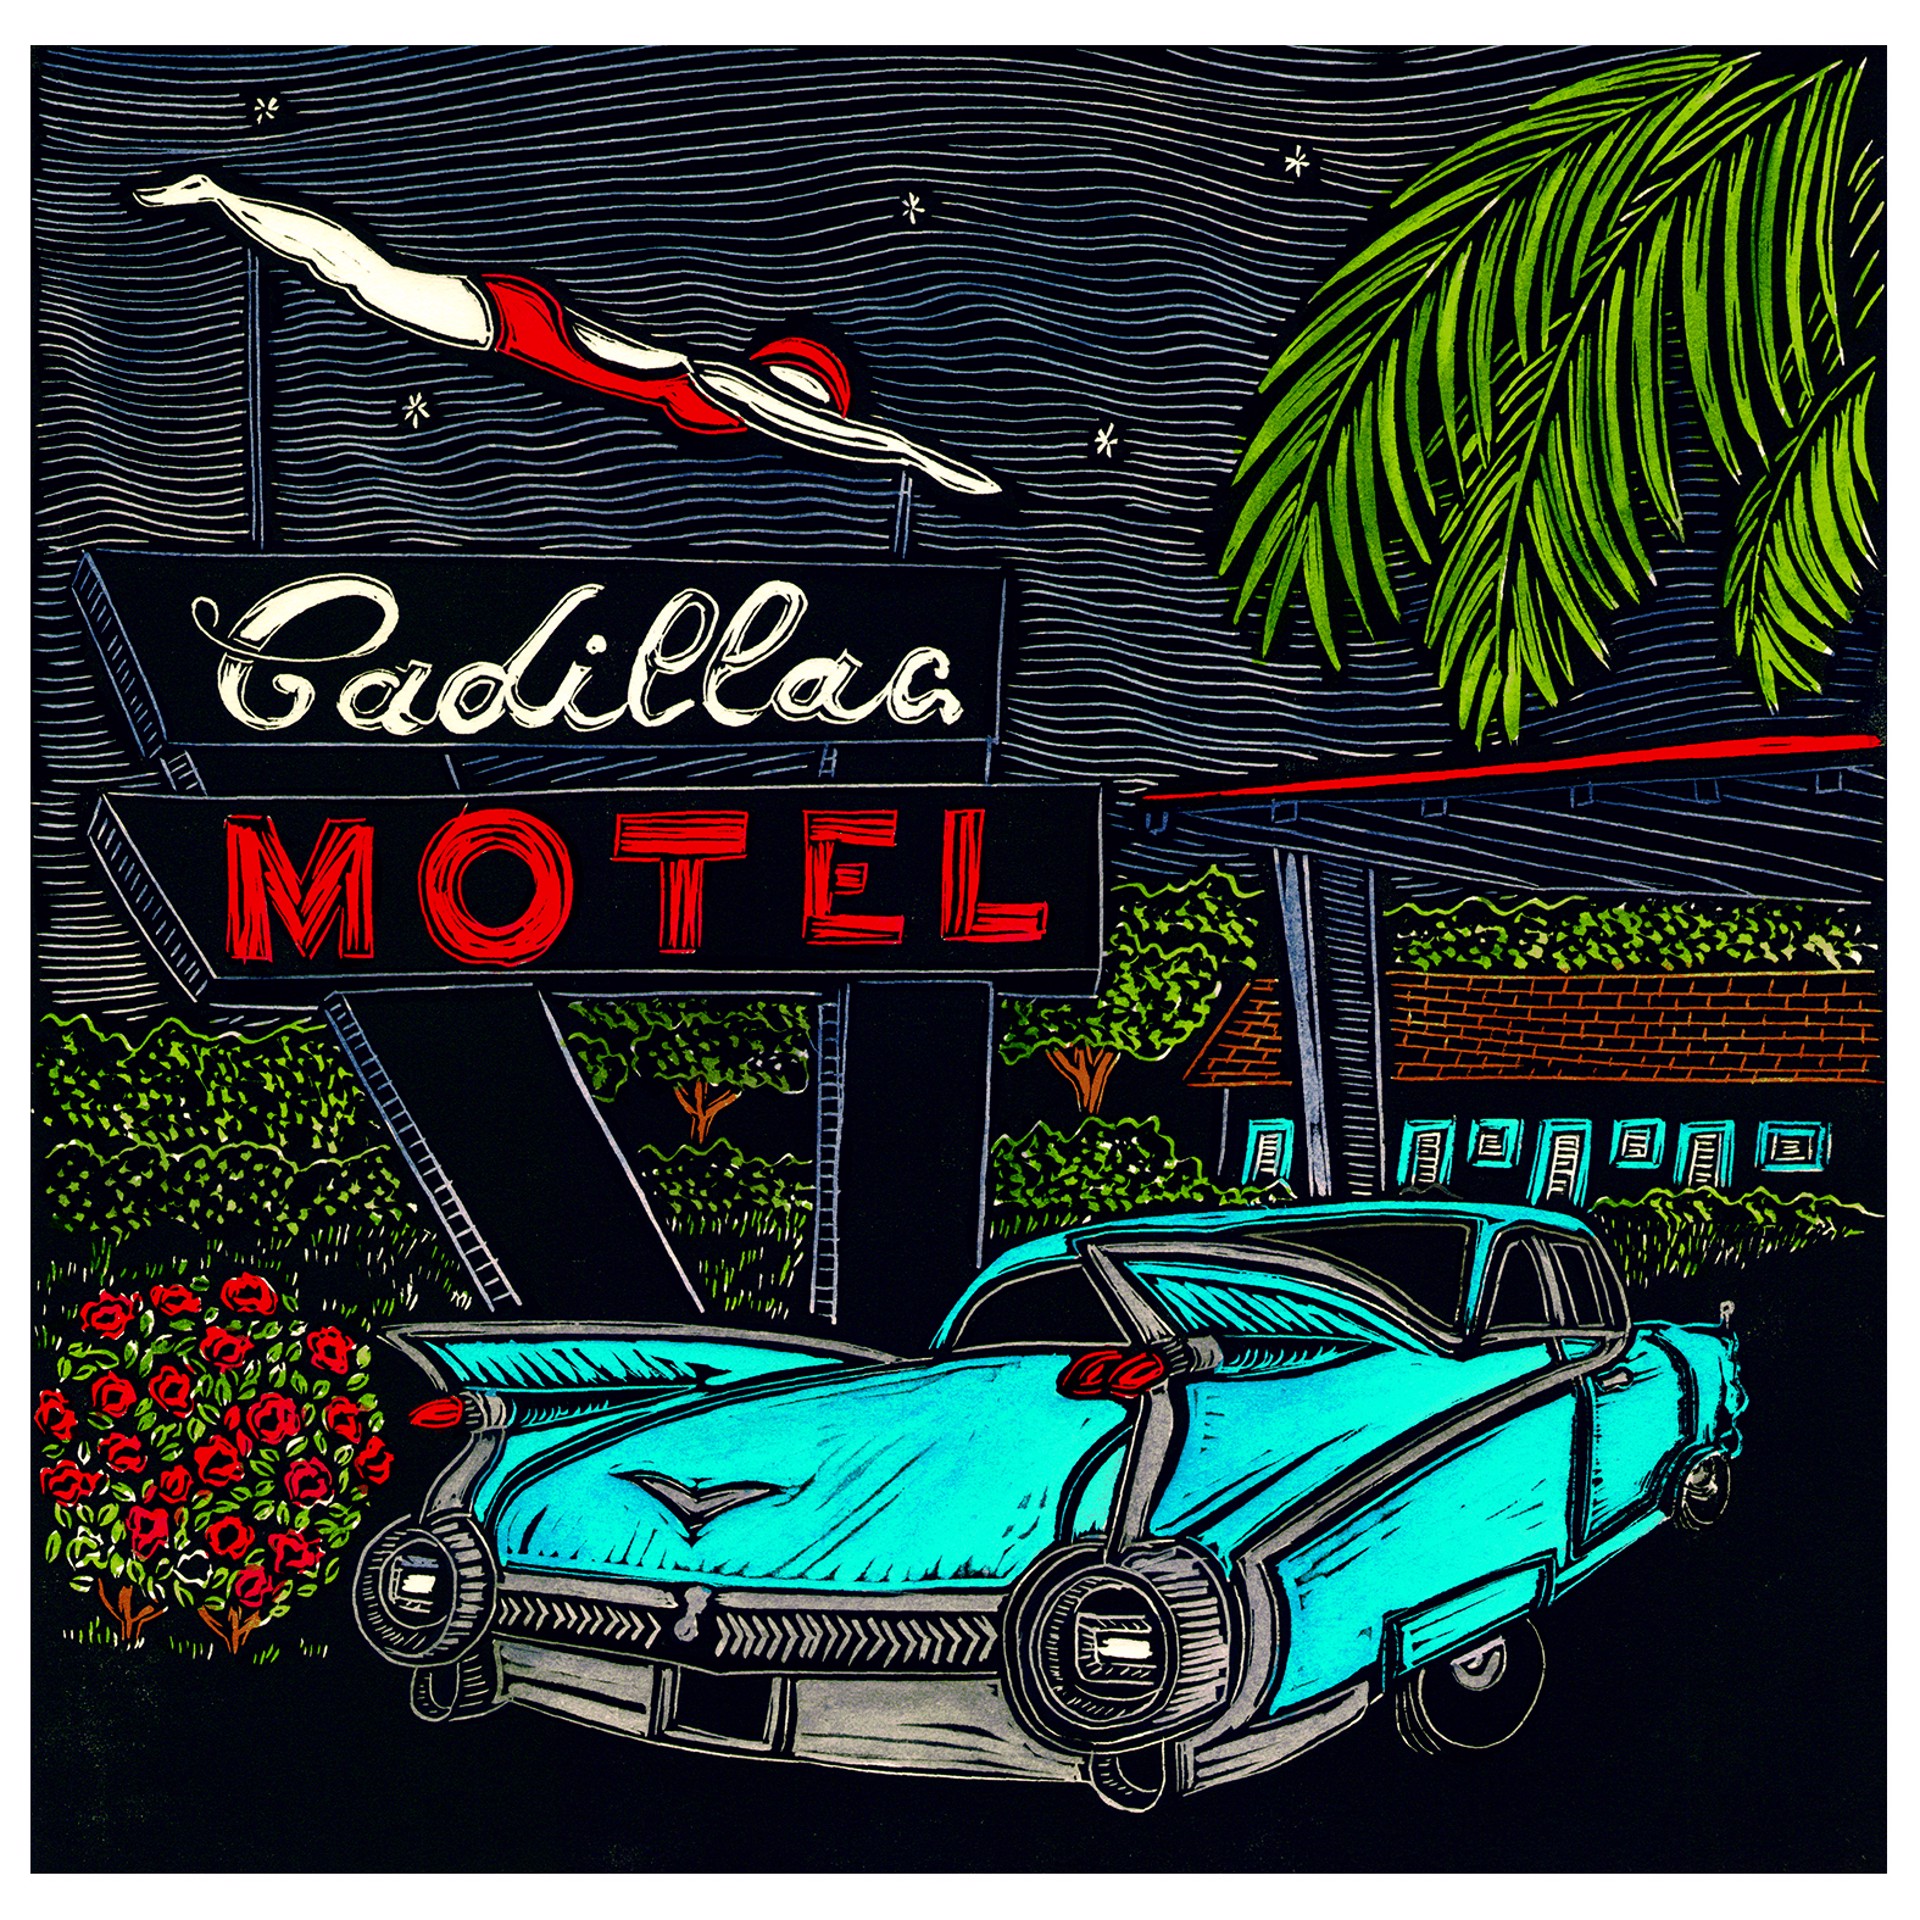 Cadillac Motel by Diana Tonnessen